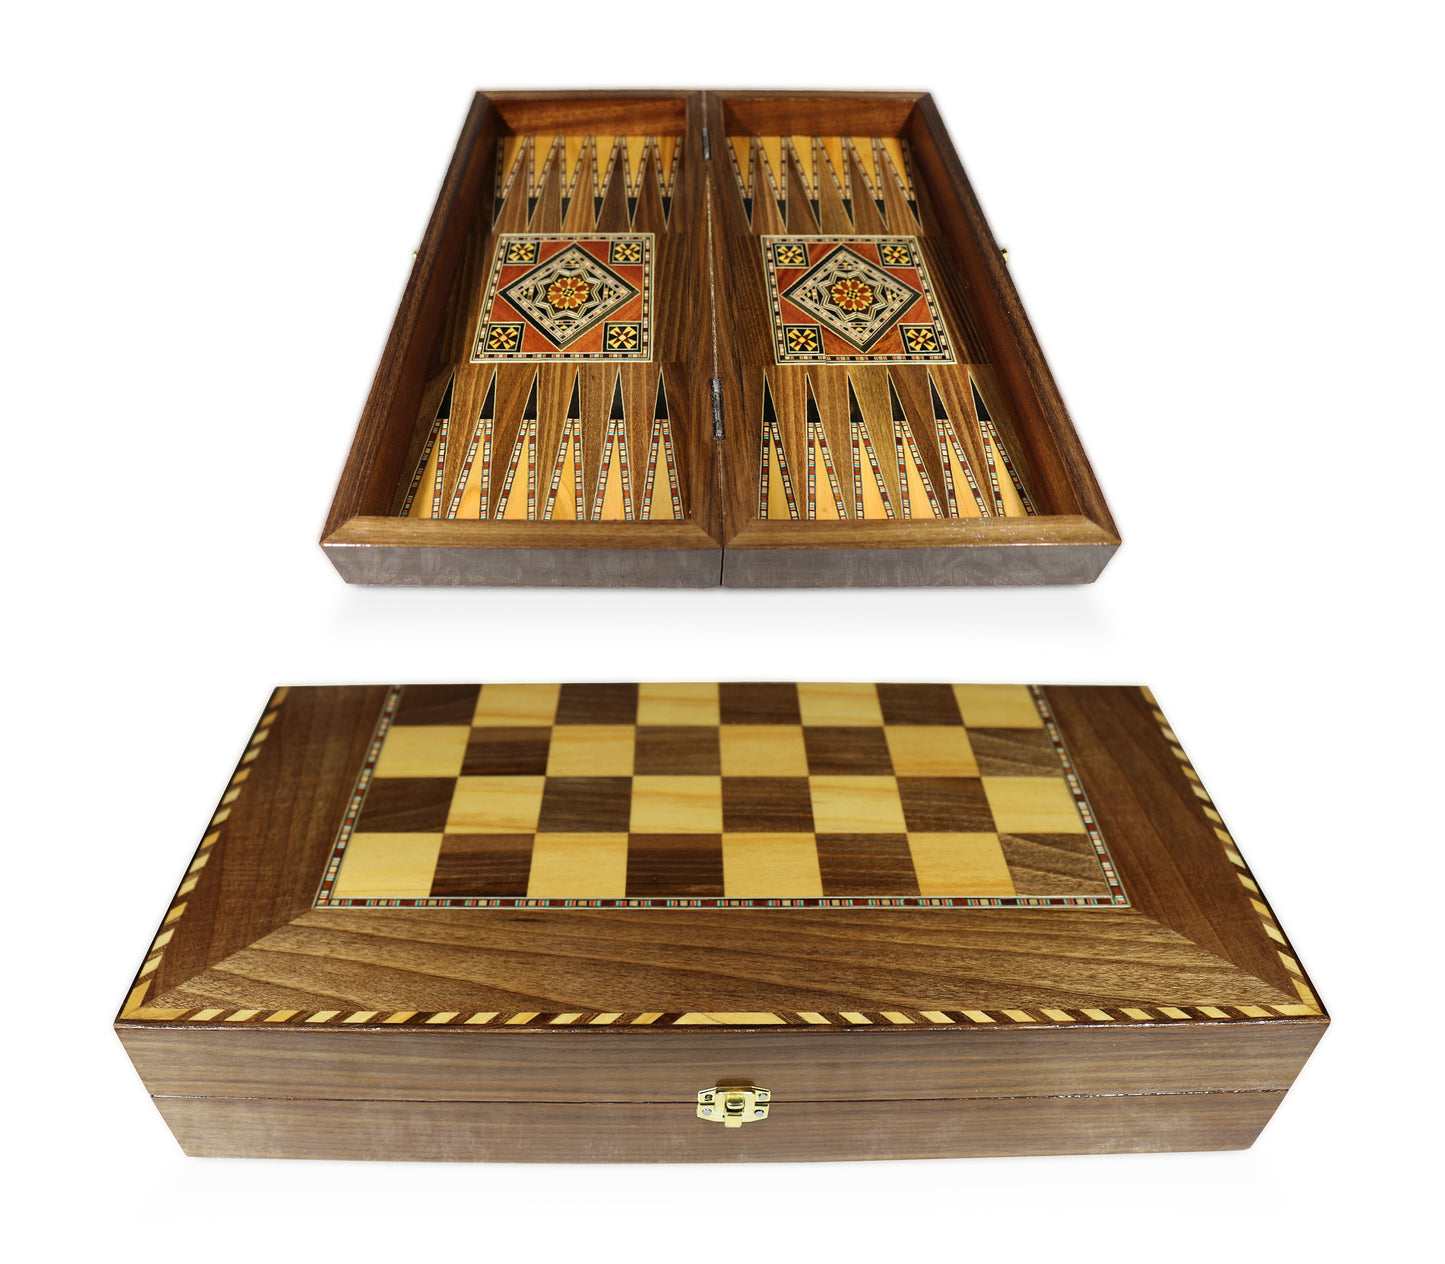 Neu 40 x 40 cm Holz Backgammon/Schachspiel/Dama Brett  EK 6-1-40 (Elessar) mit 30 Holz Backgammon Steine